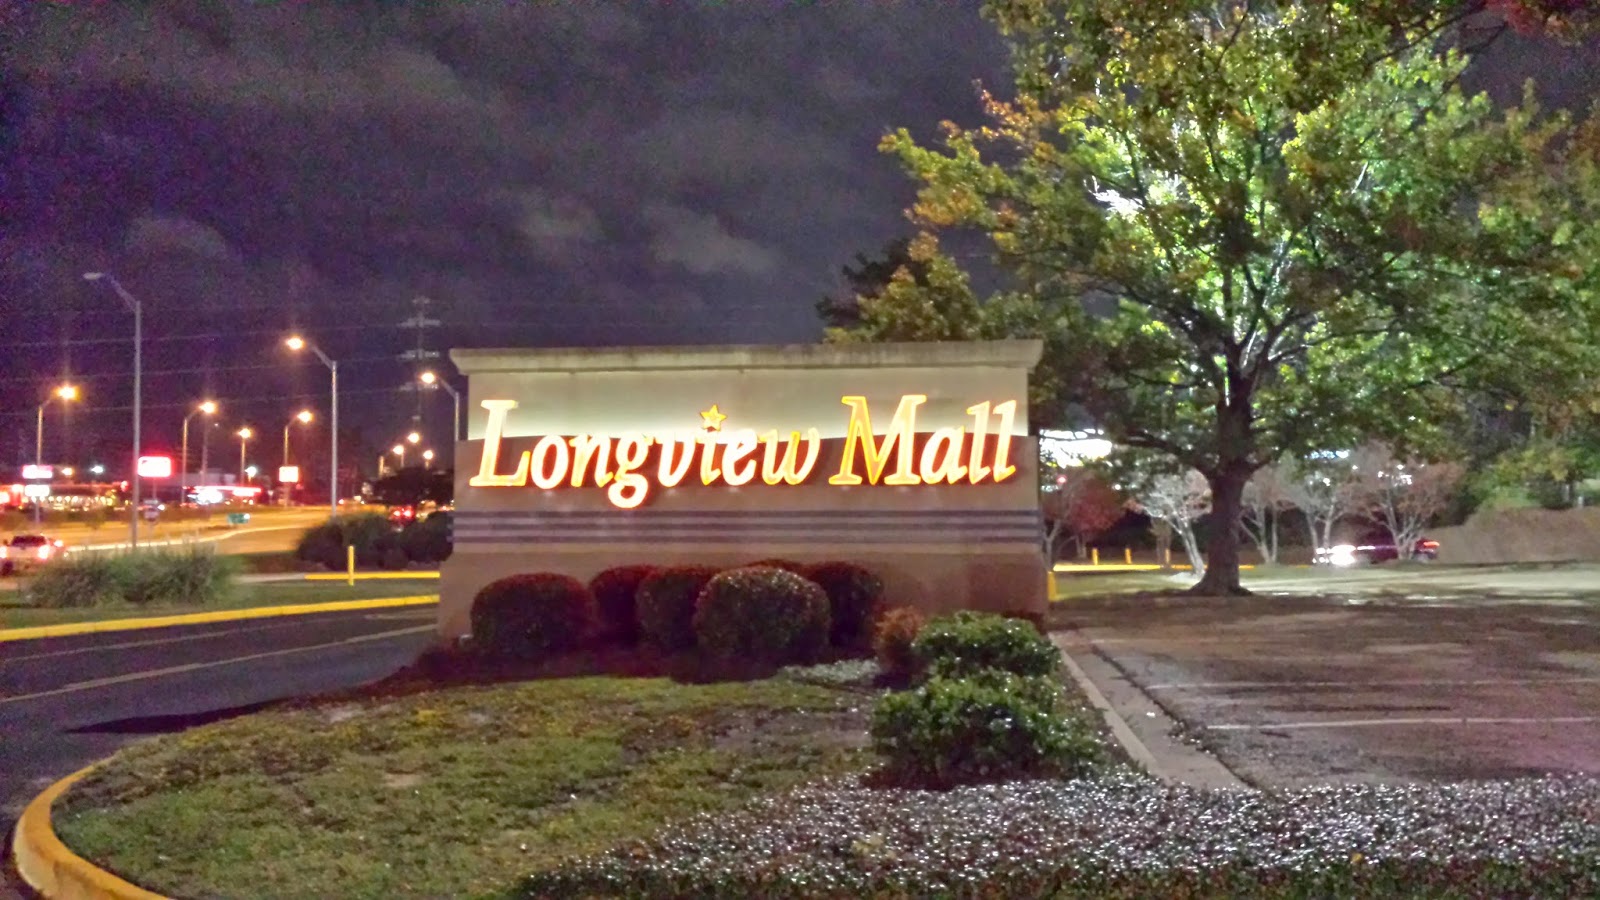 ... Texas Southern Malls and Retail: Longview Mall, Longview Texas 2013